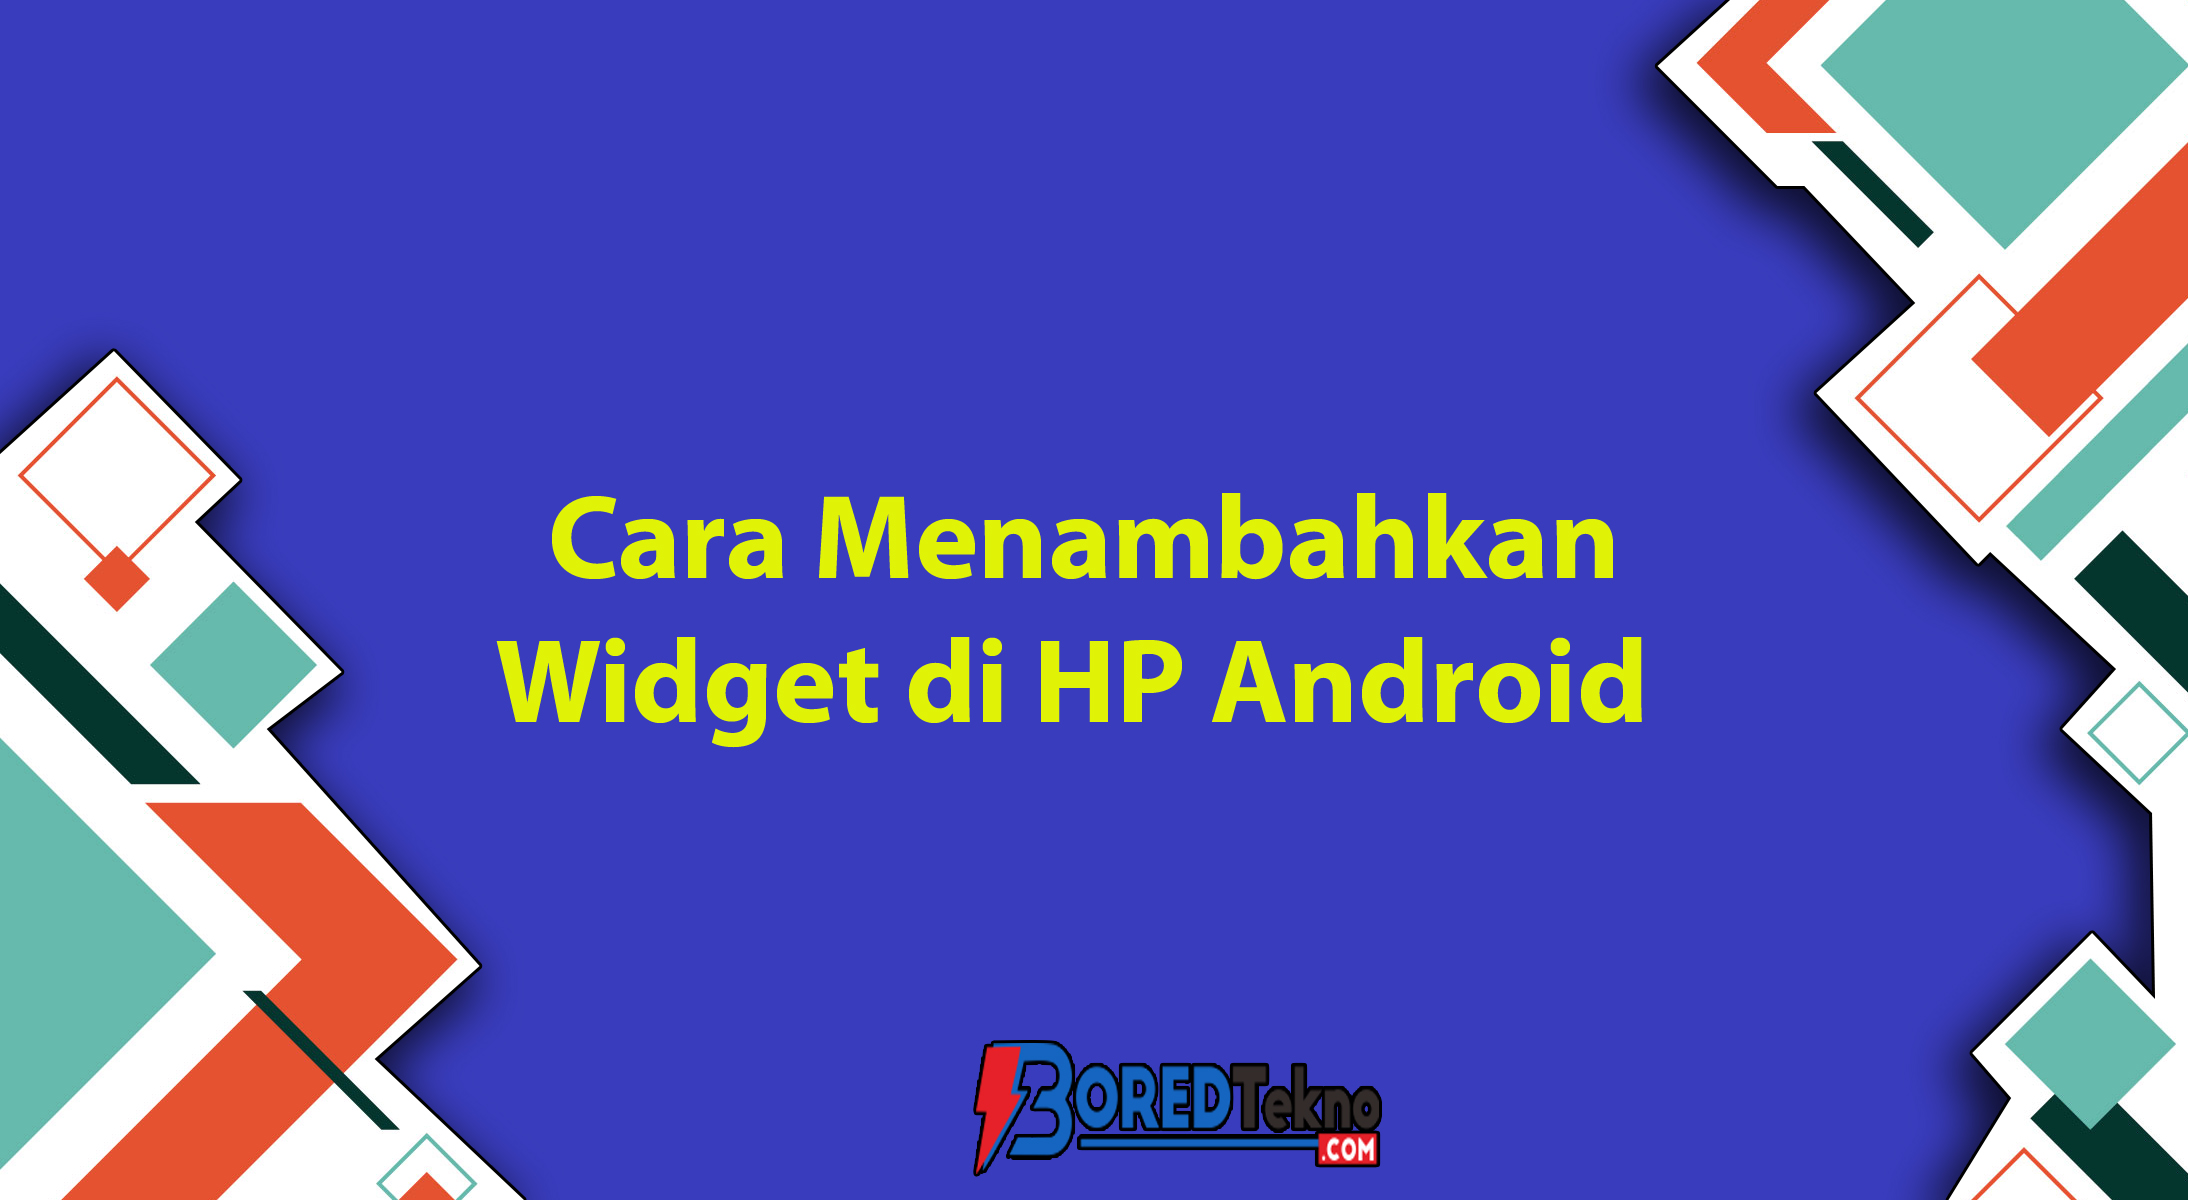 Cara Menambahkan Widget di HP Android  Xiaomi 